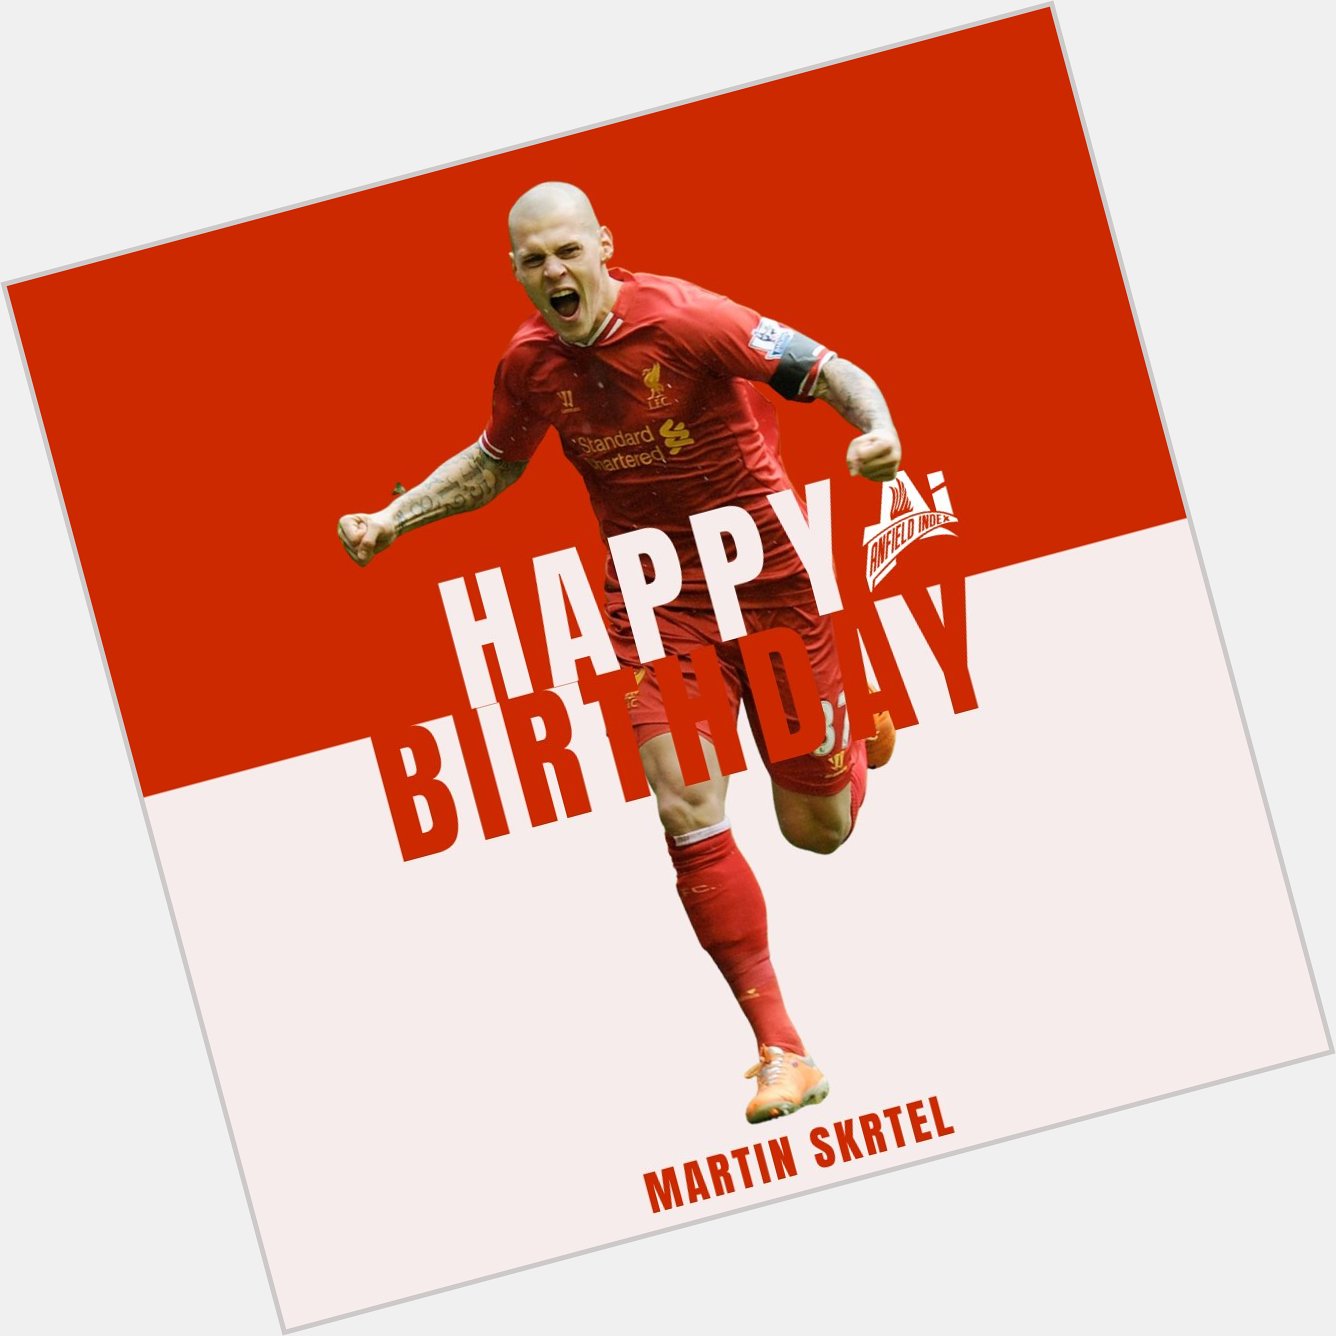   Happy 38th Birthday to former player Martin krtel  